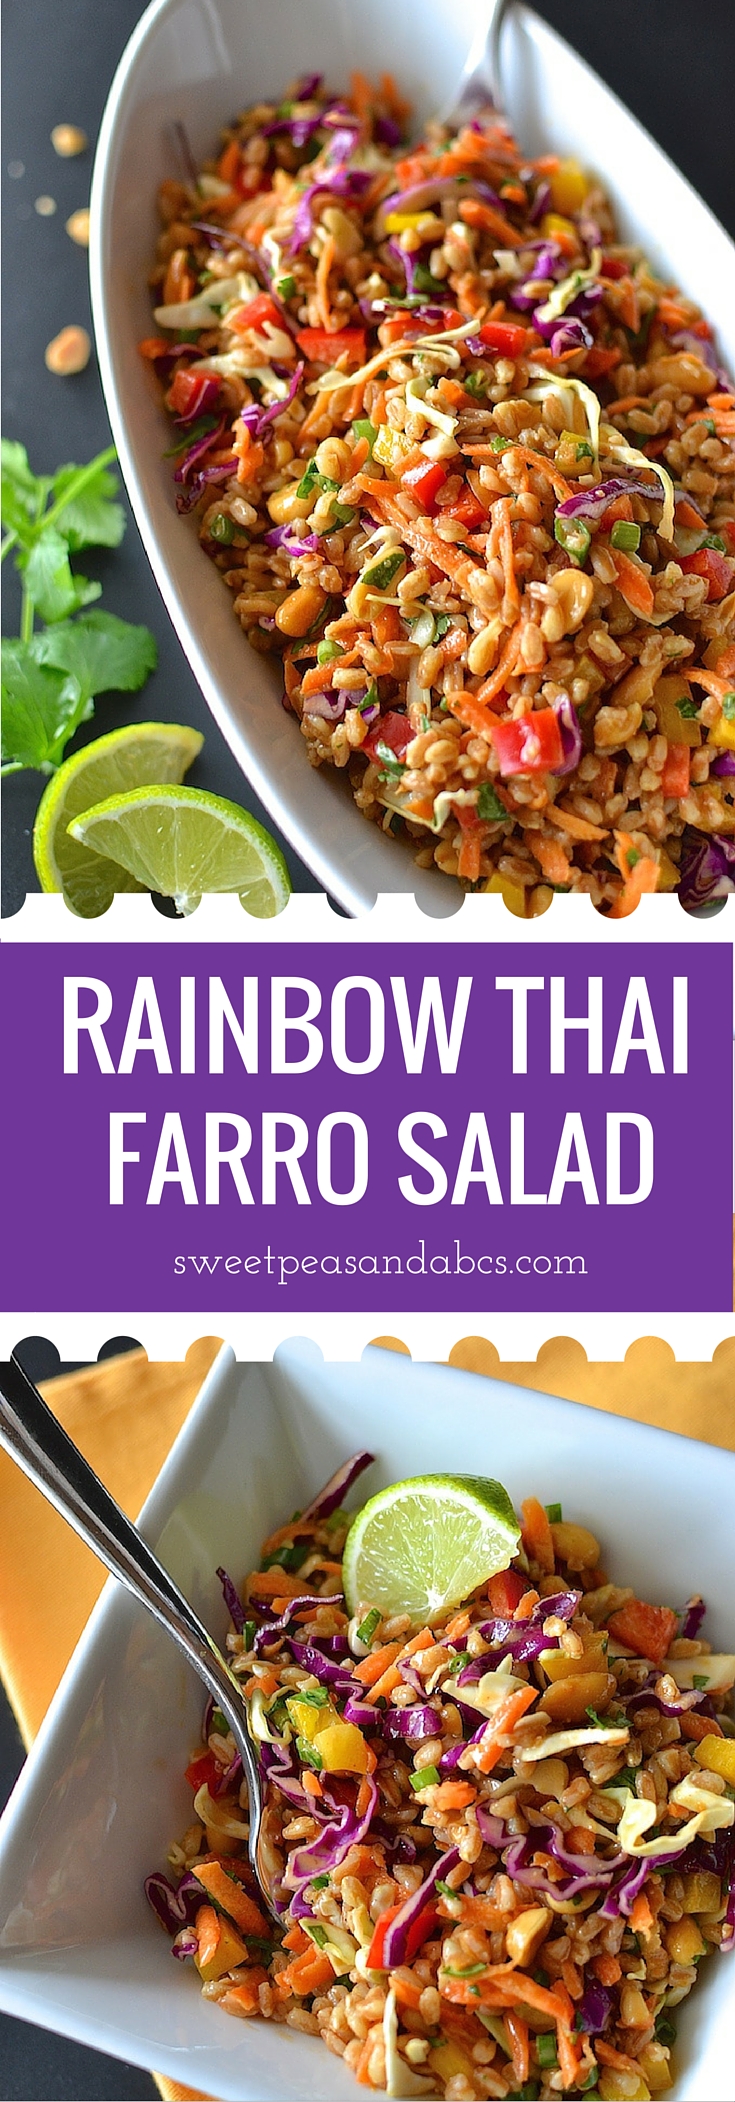 Rainbow Thai Farro Salad - Crunchy colorful veggies and chewy, nutty farro in a creamy Thai peanut dressing. A perfect vegetarian lunch or side dish! ~sweetpeasandabcs.com